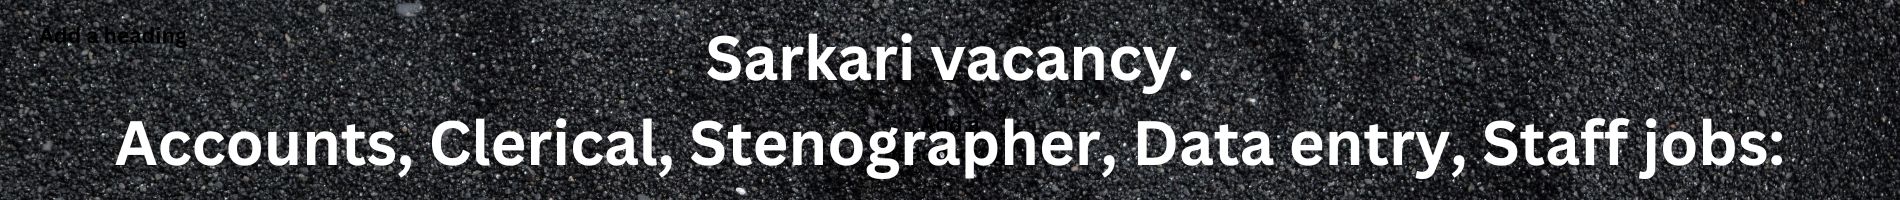 Sarkari vacancy. Accounts, Clerical, Stenographer, Data entry, Staff jobs: